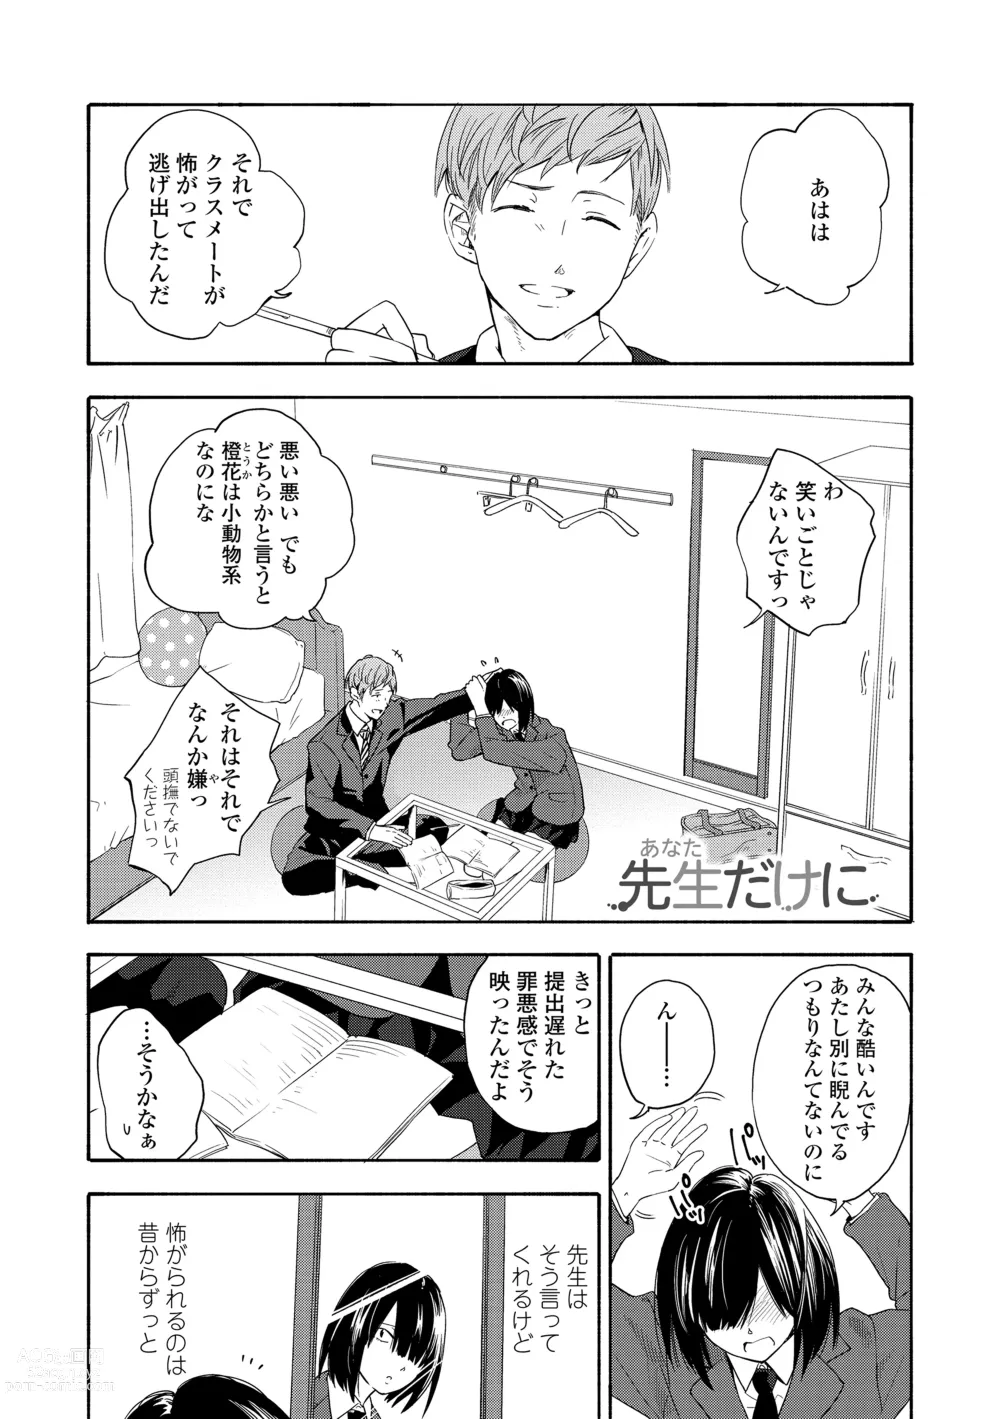 Page 6 of manga Shishunki no Eros - puberty eros + DLsite Kounyu Tokuten